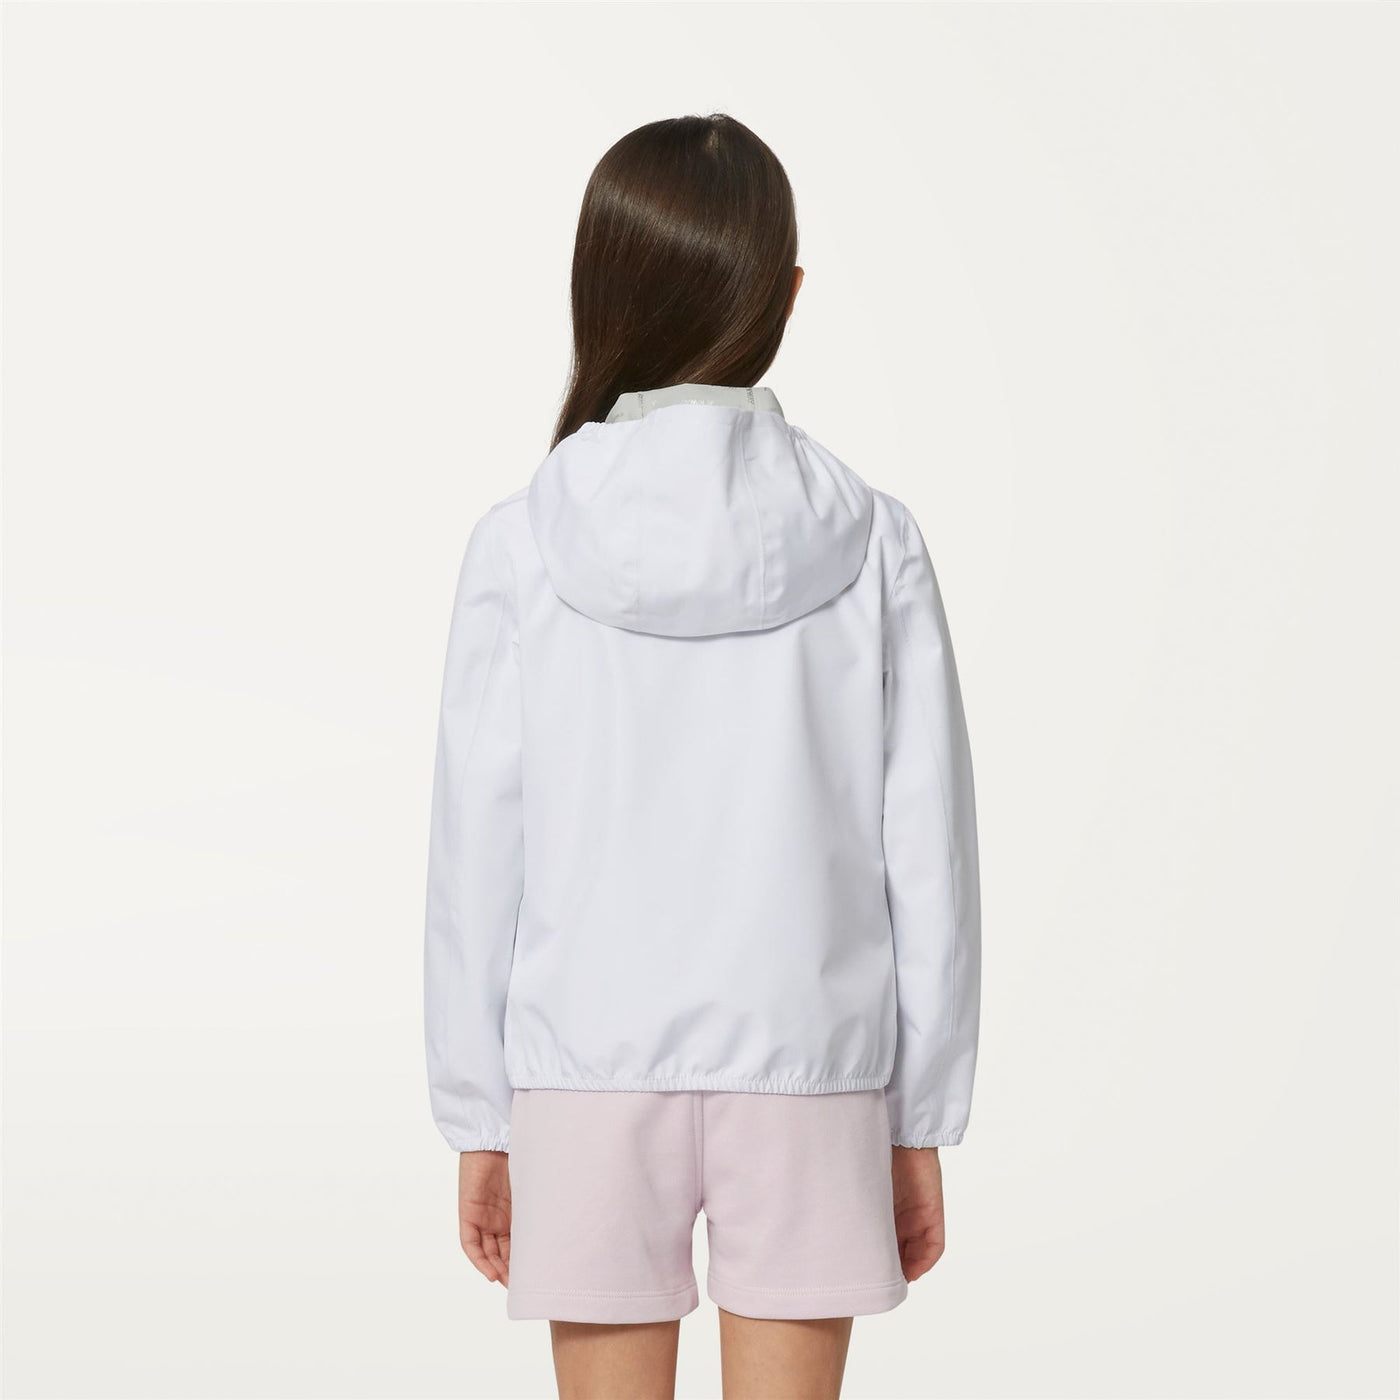 P.  LIL STRETCH DOT - Jacket - Polyester - Girl - White